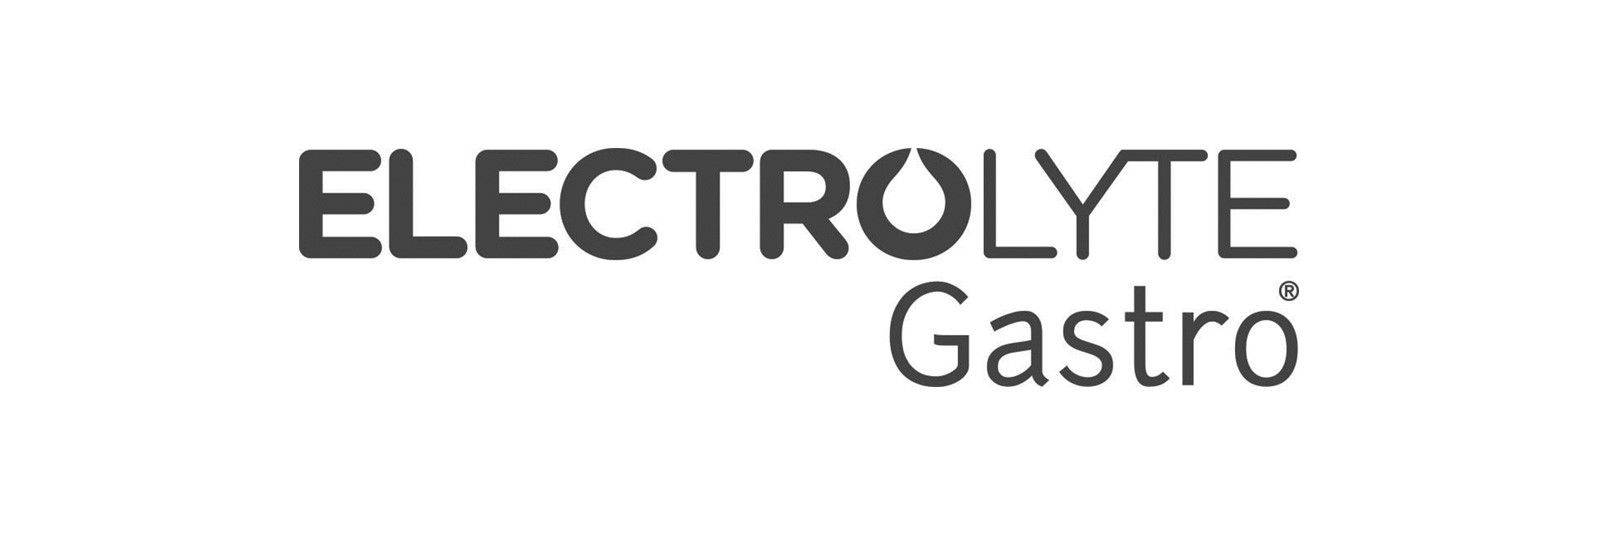 Electrolyte Gastro